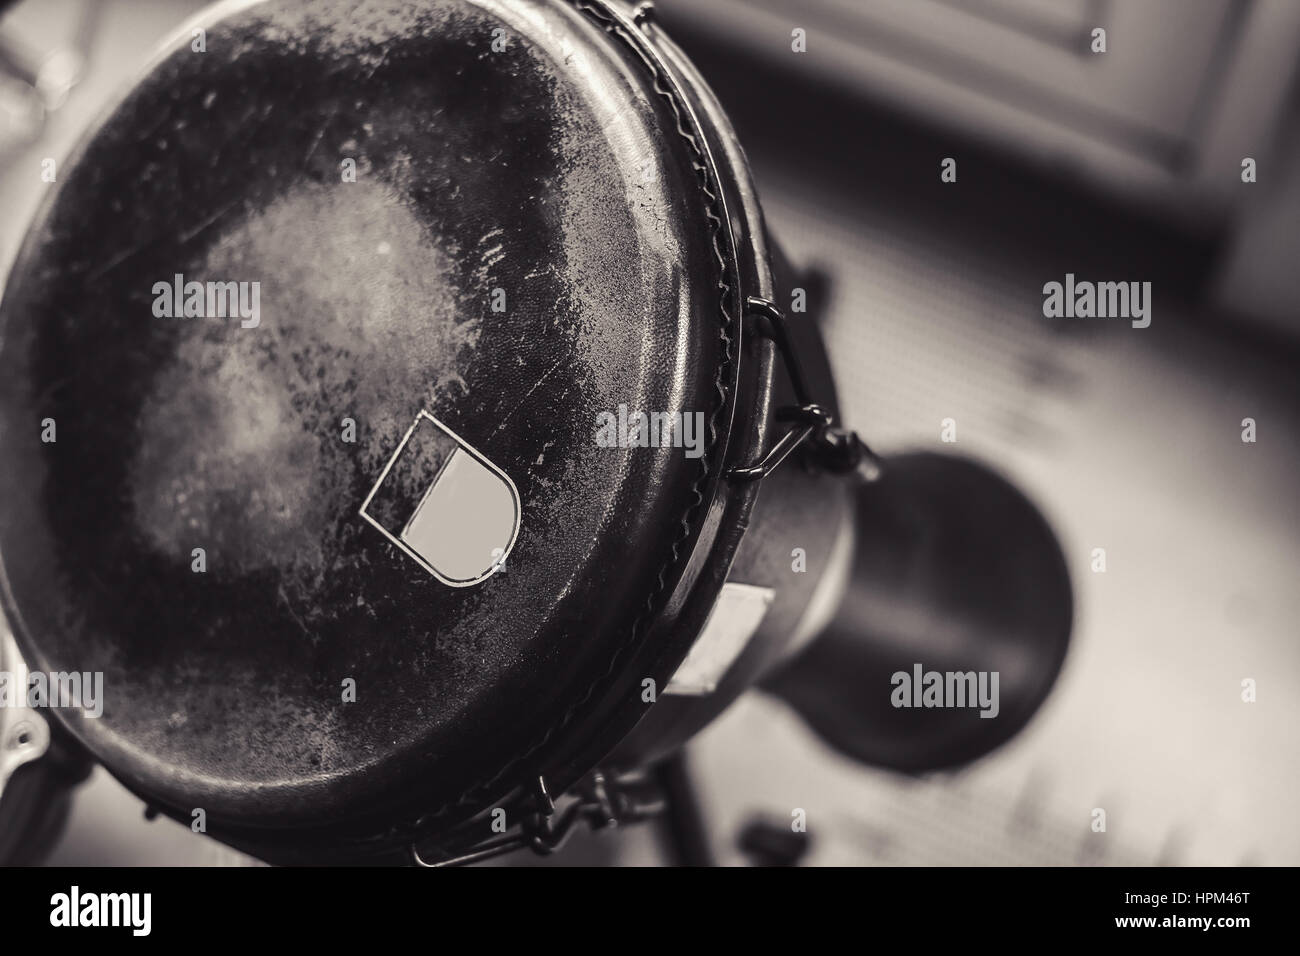 Closeup view of Latin djembe, percussion instrument. Stock Photo